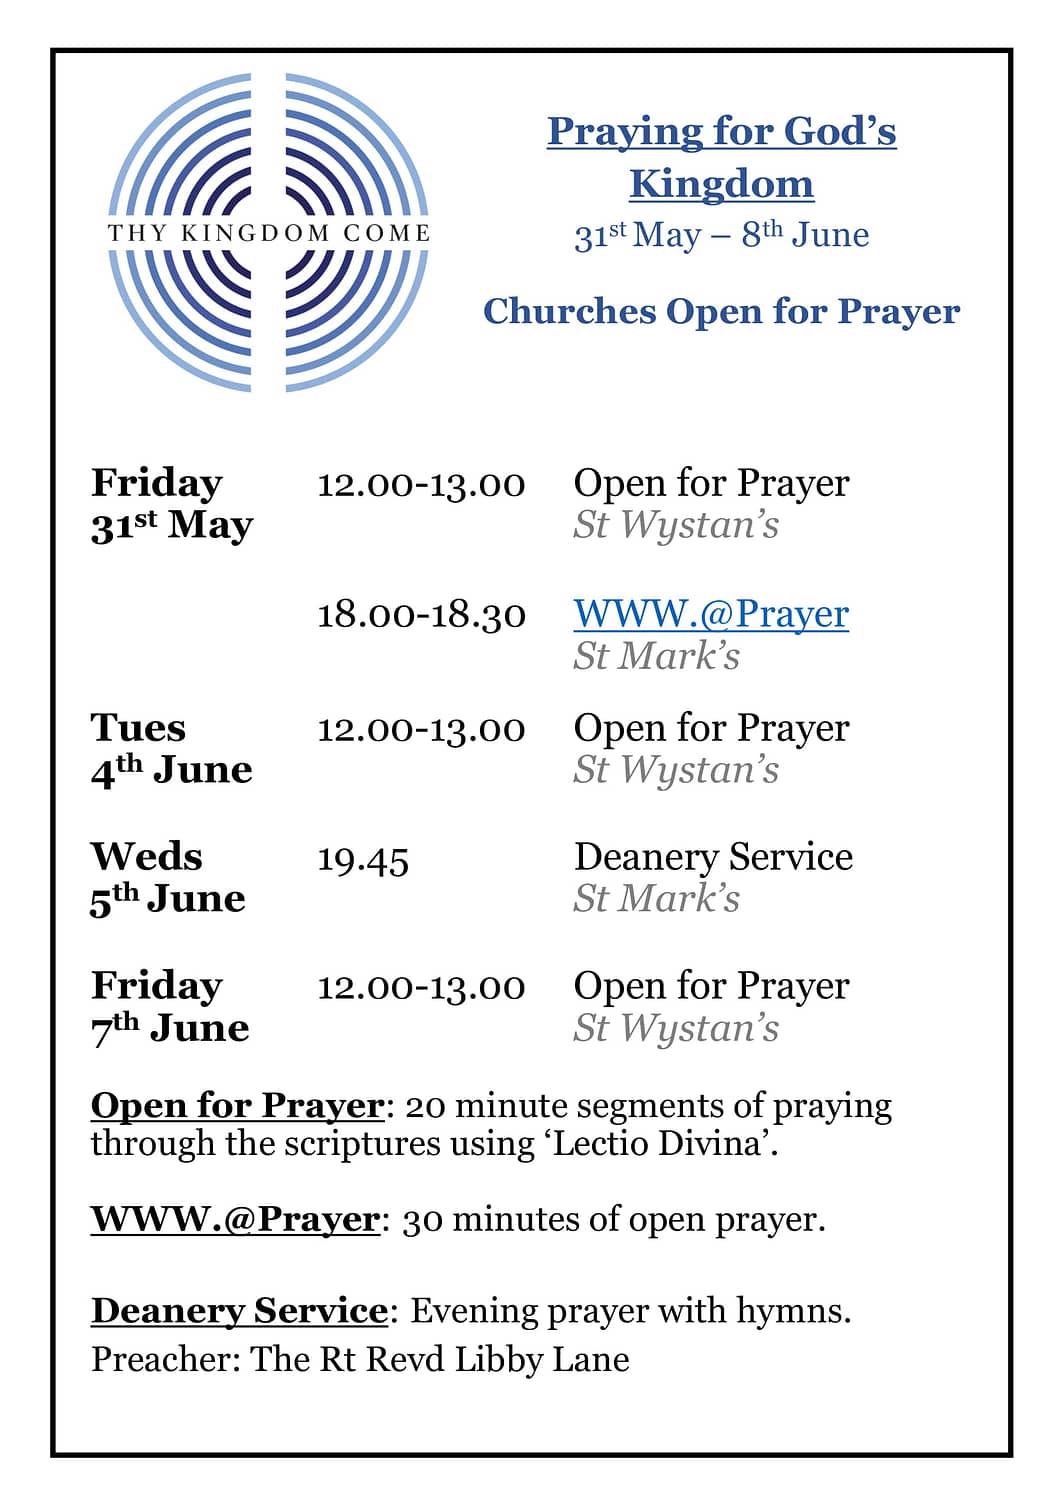 Churches Open for Prayer June 2019